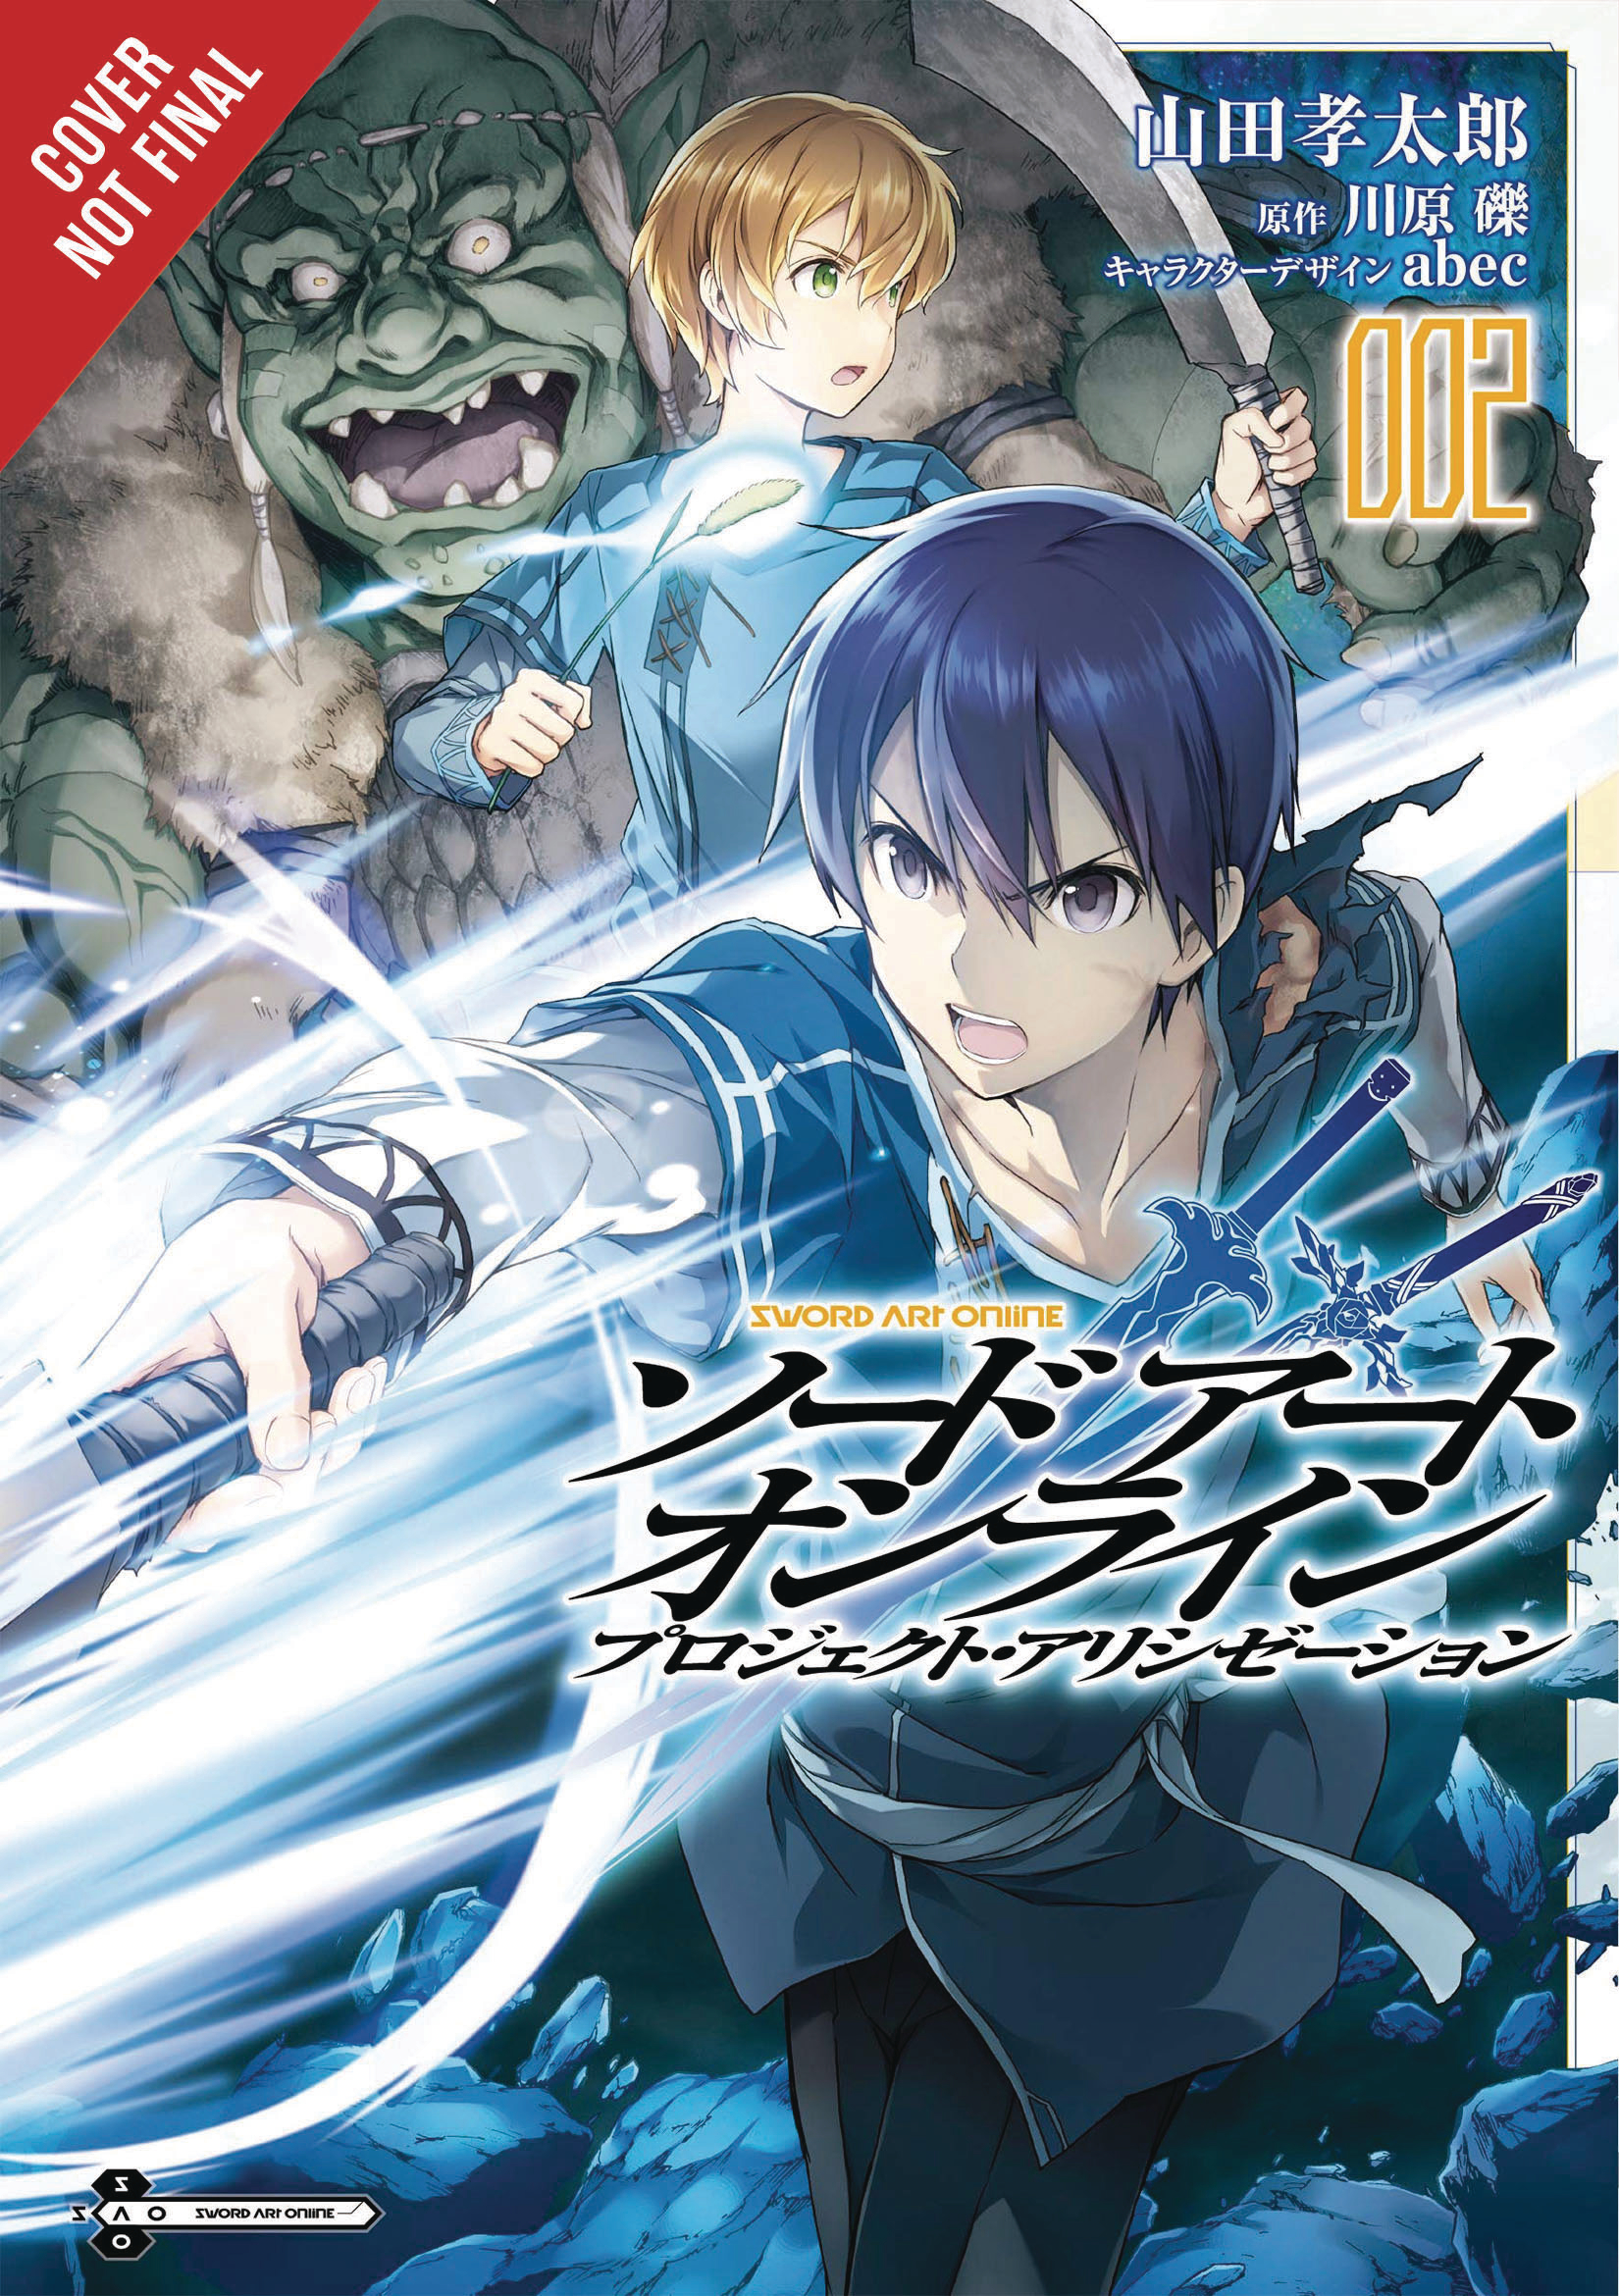 Sword Art Online Project Alicization Manga Volume 2